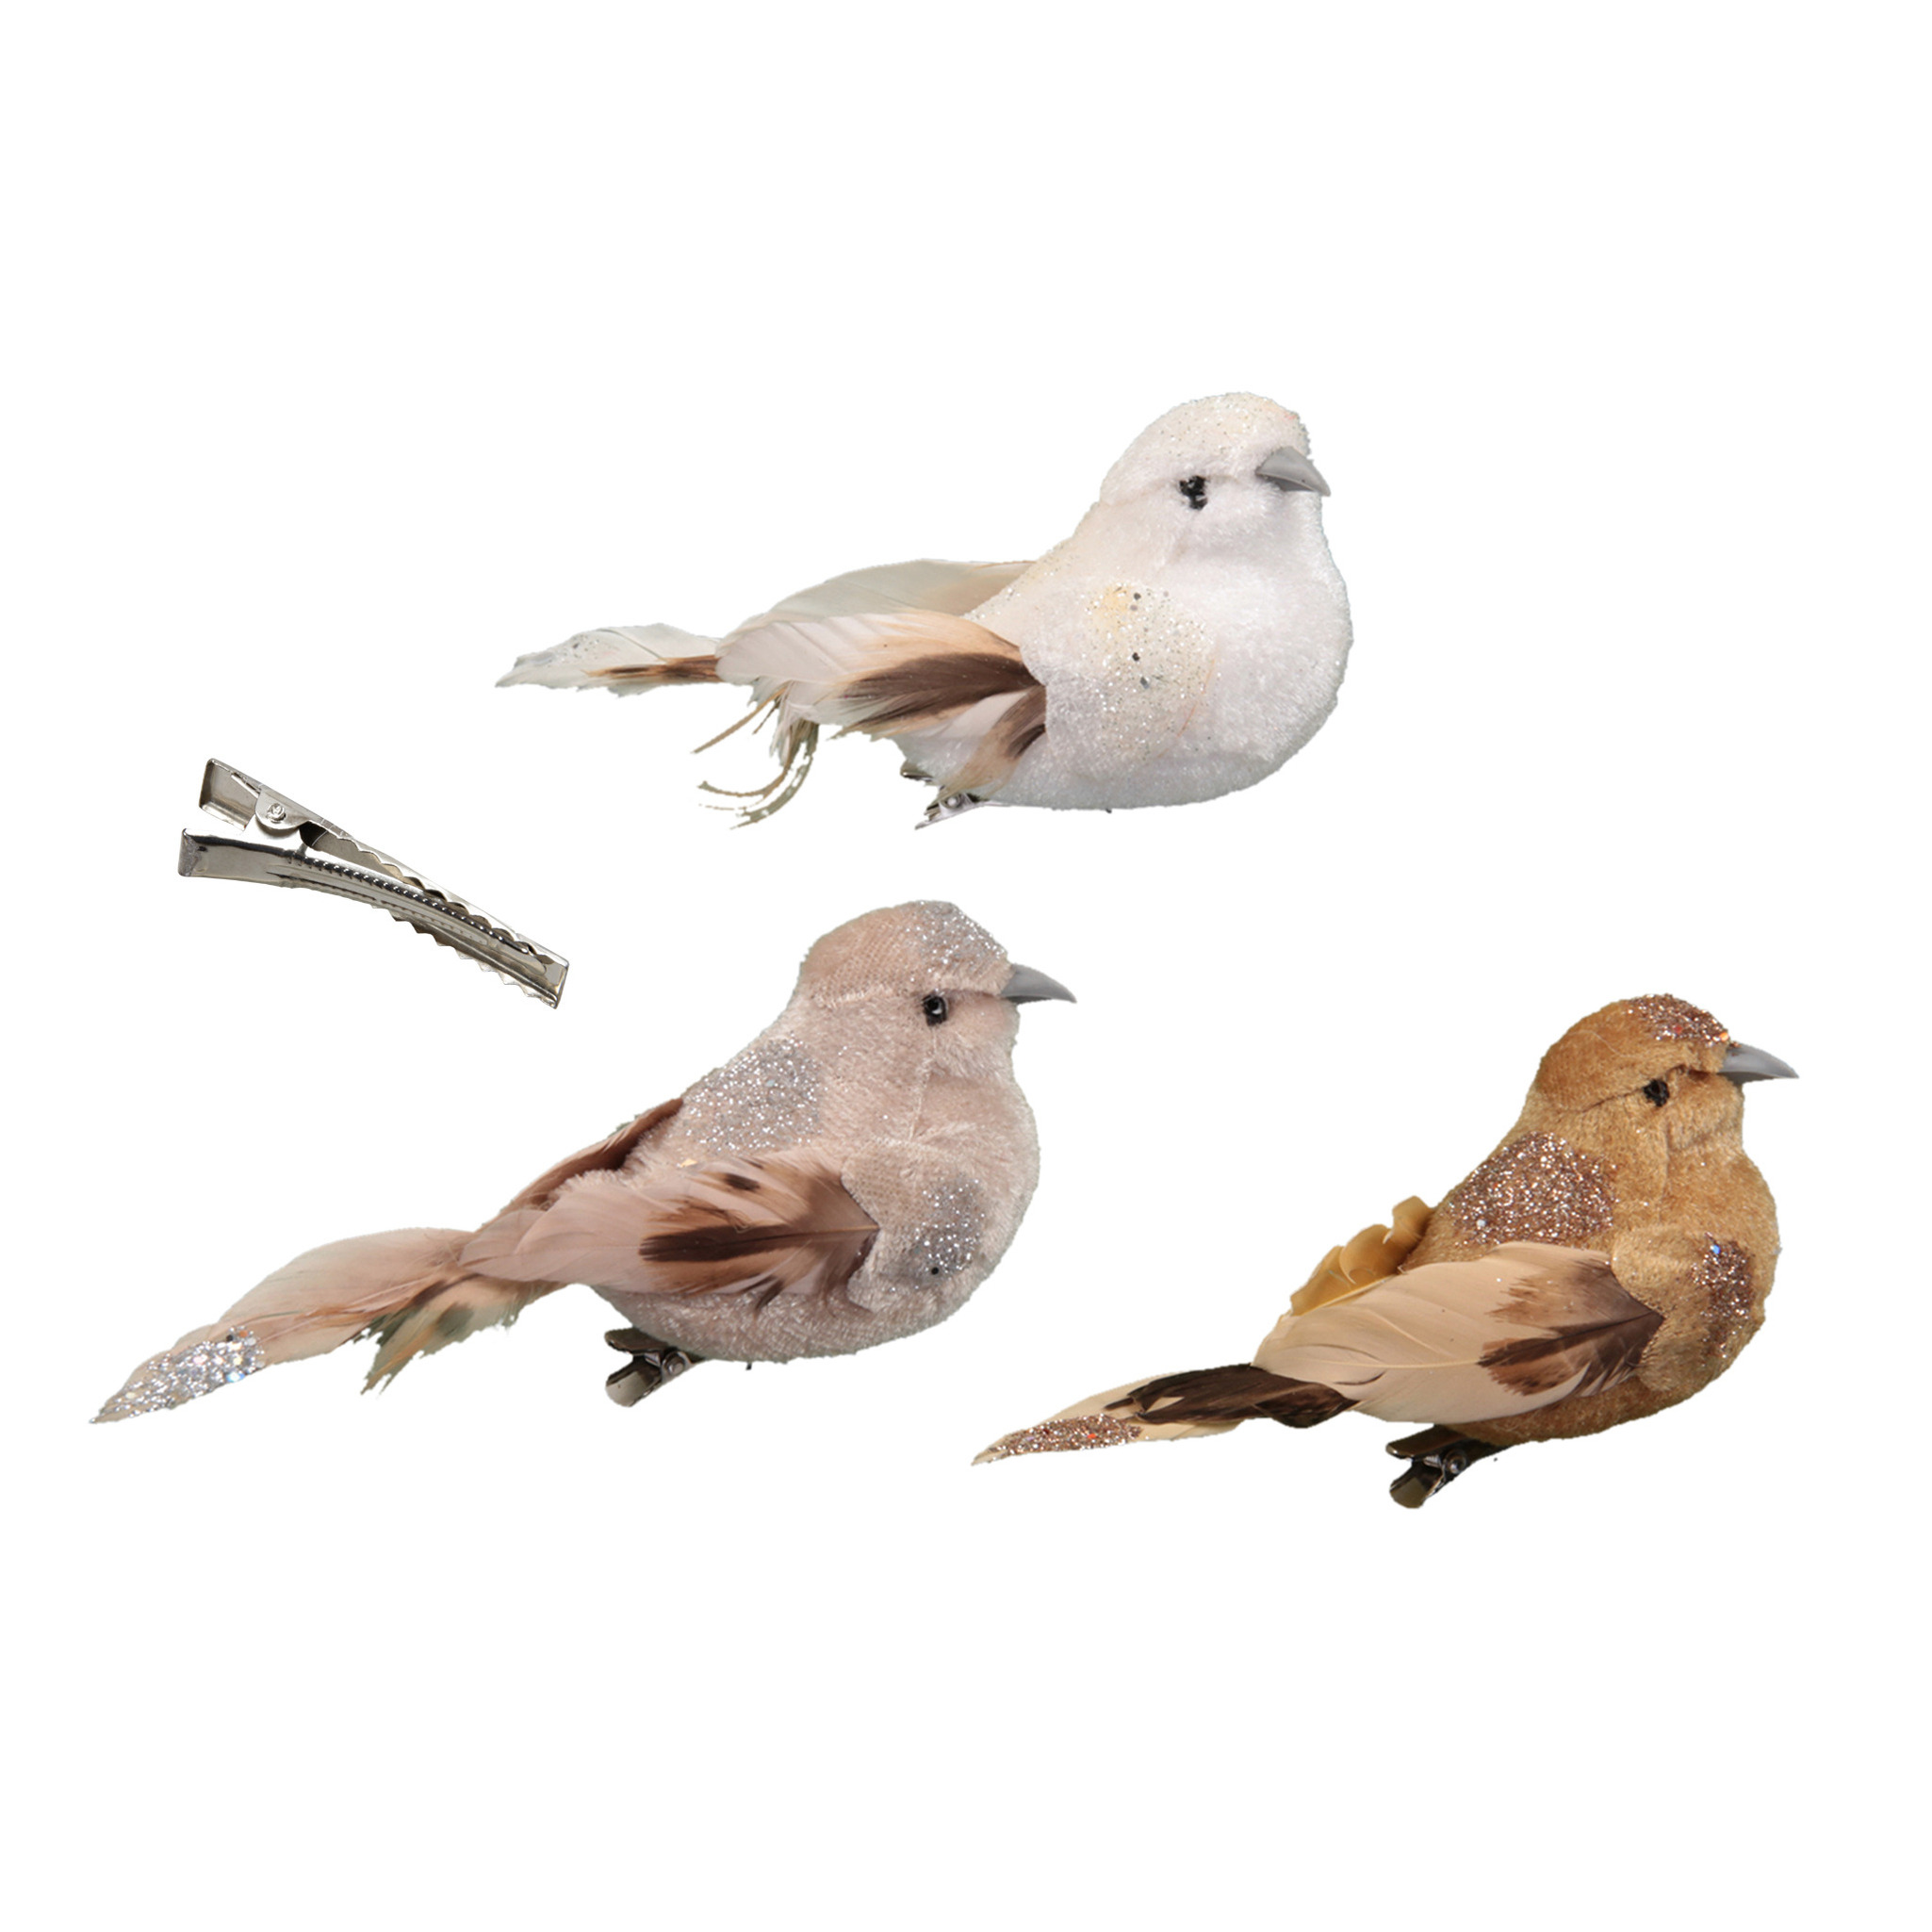 Othmar Decorations vogels op clip - 6x stuks - wit/beige/bruin - 13 cm